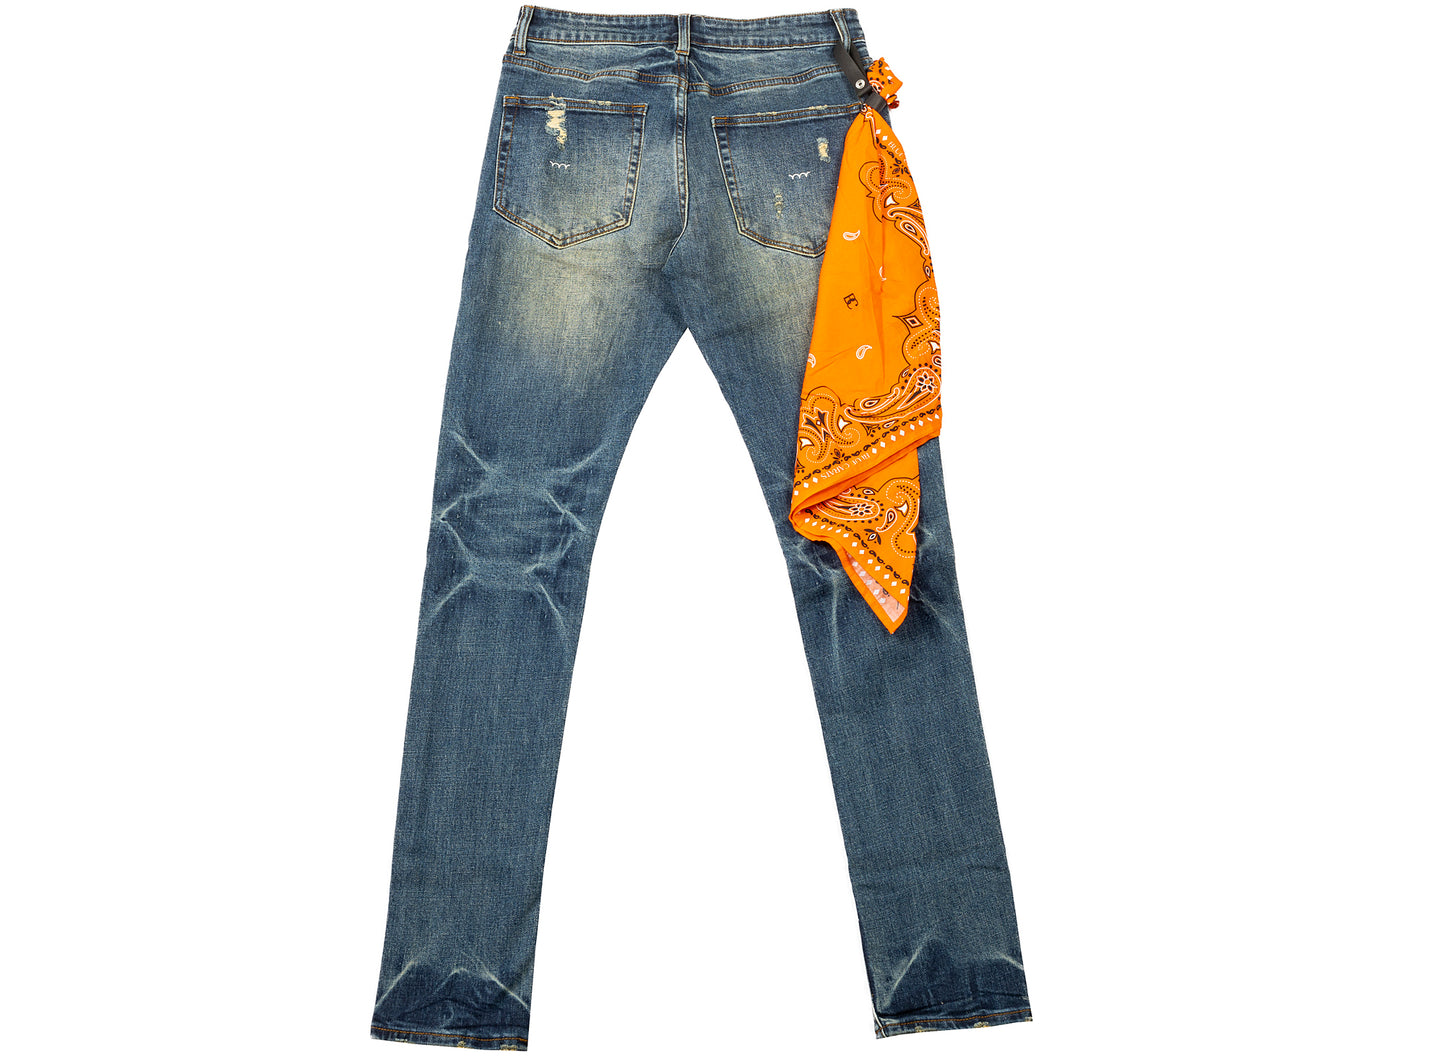 BLUECARATS McQueen 5 Pocket Slim Fit Jeans in Indigo